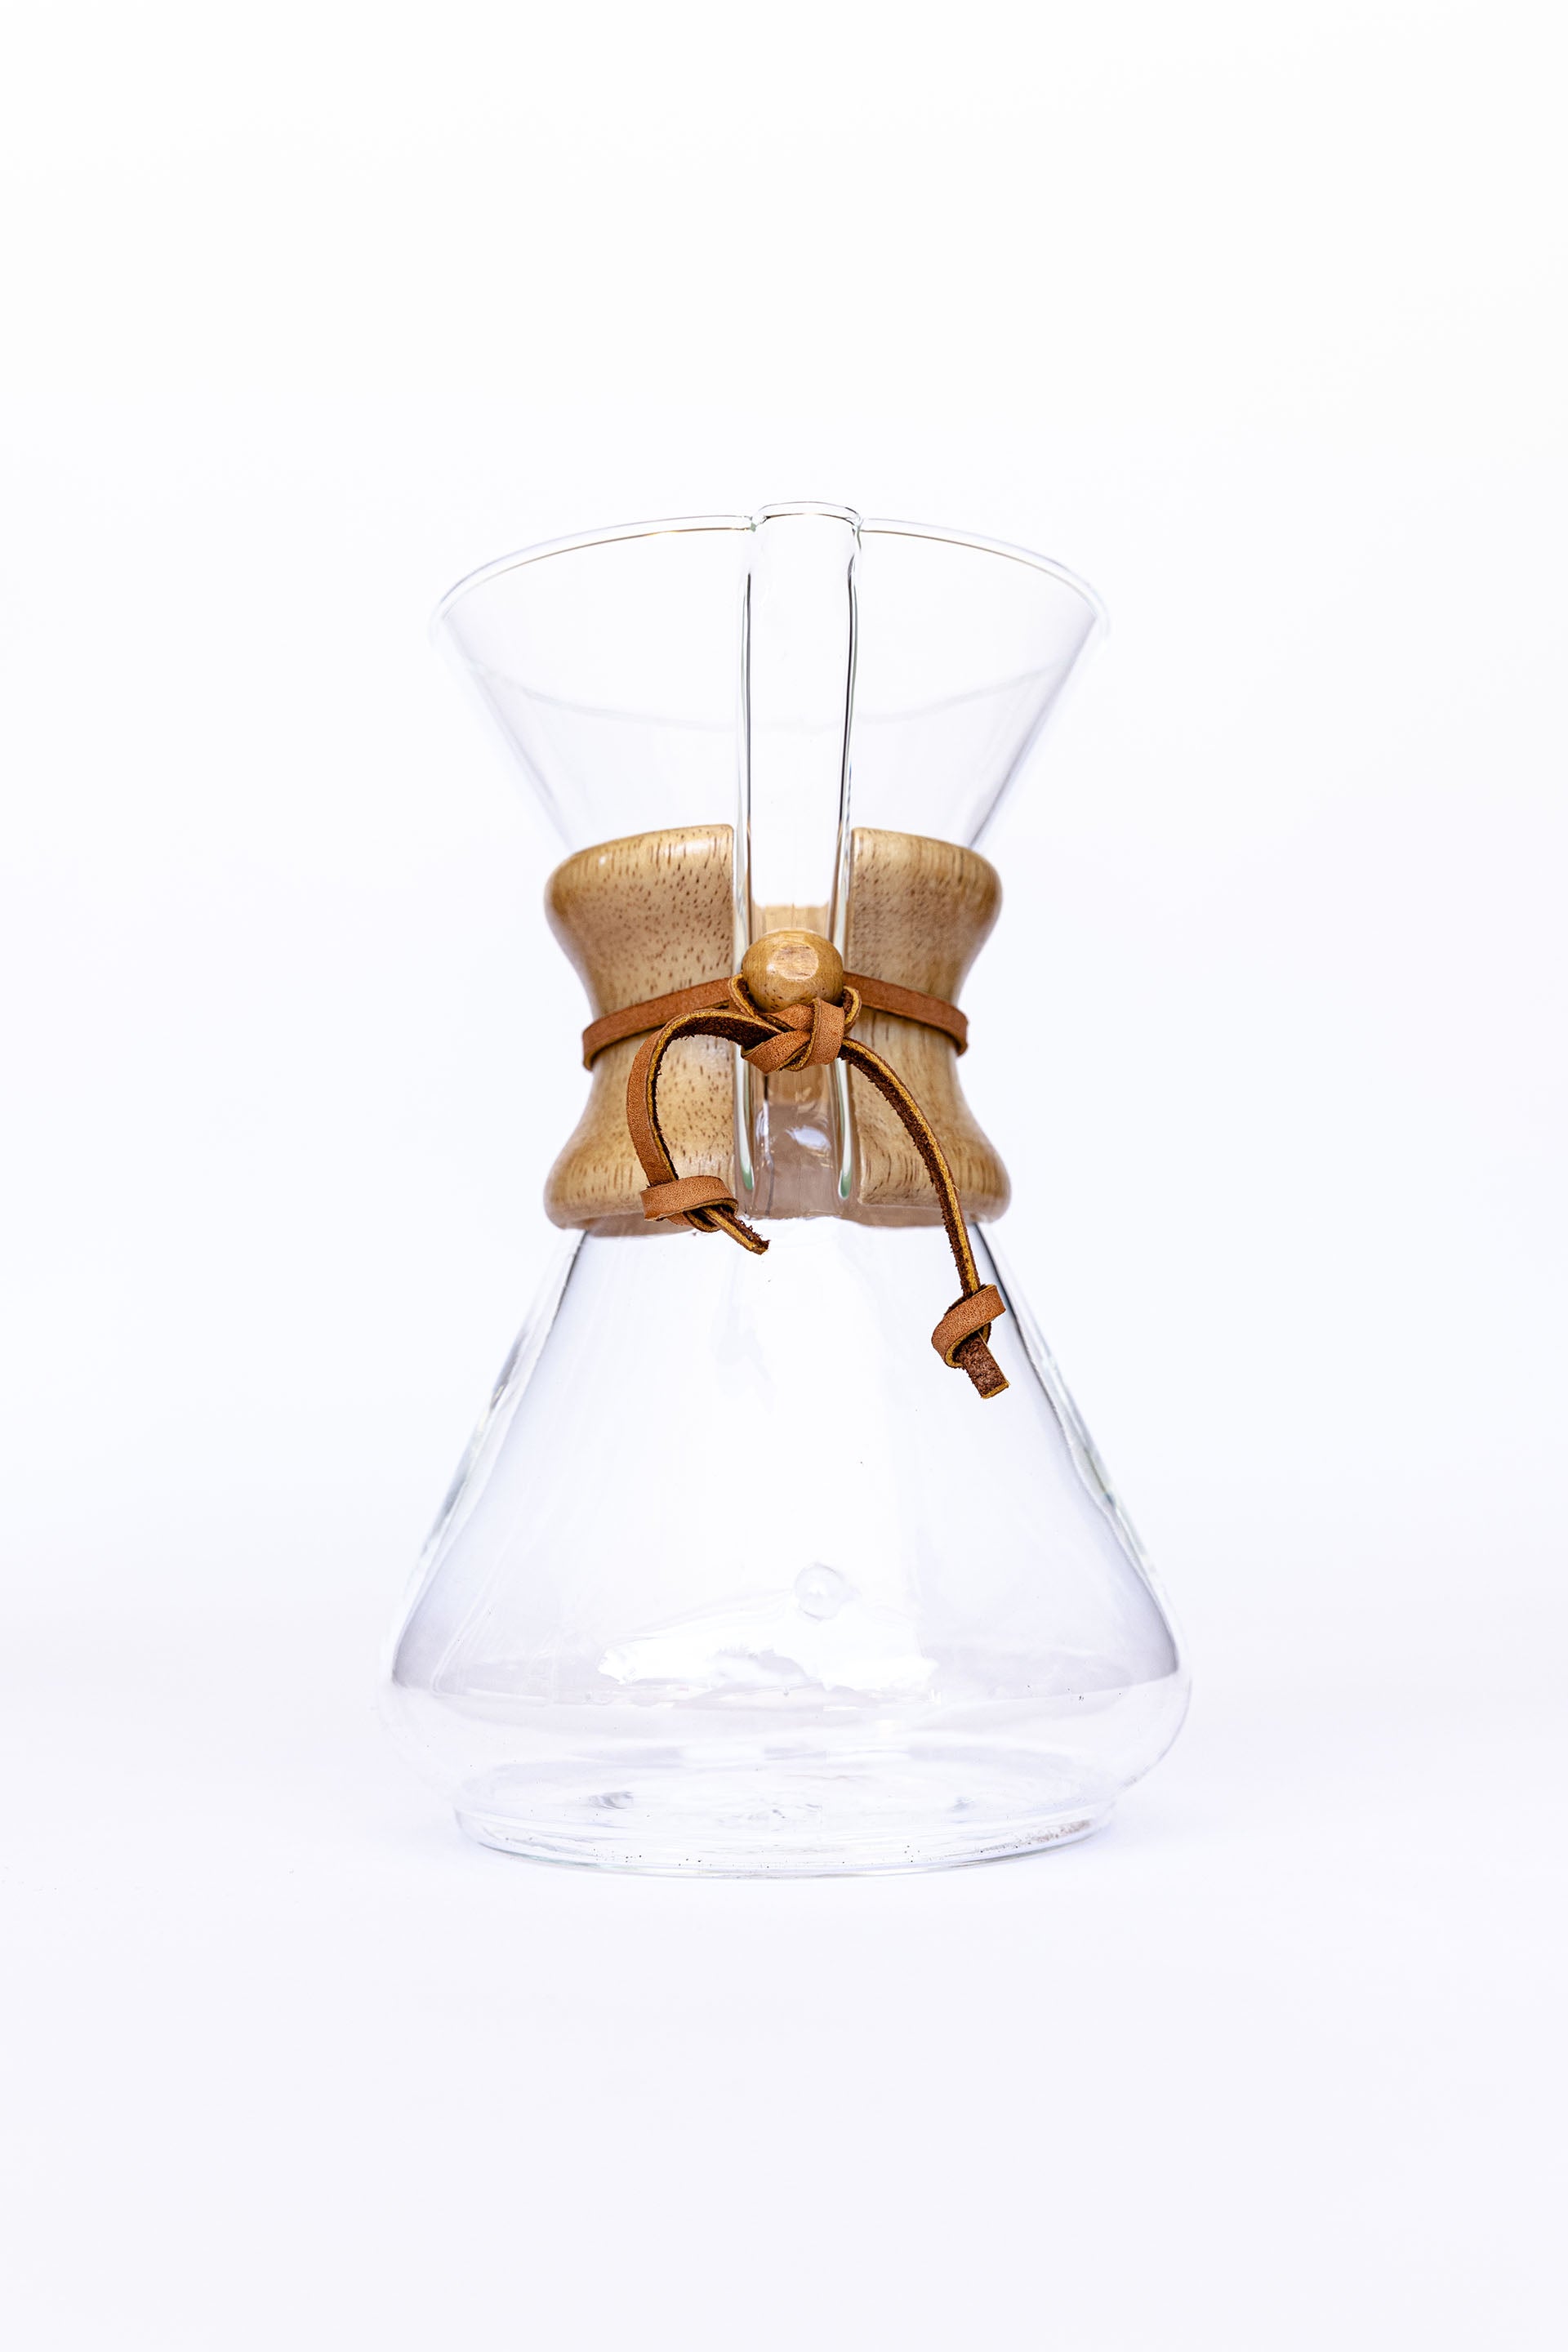 Chemex Coffee Maker - 10 Cup / 50oz.